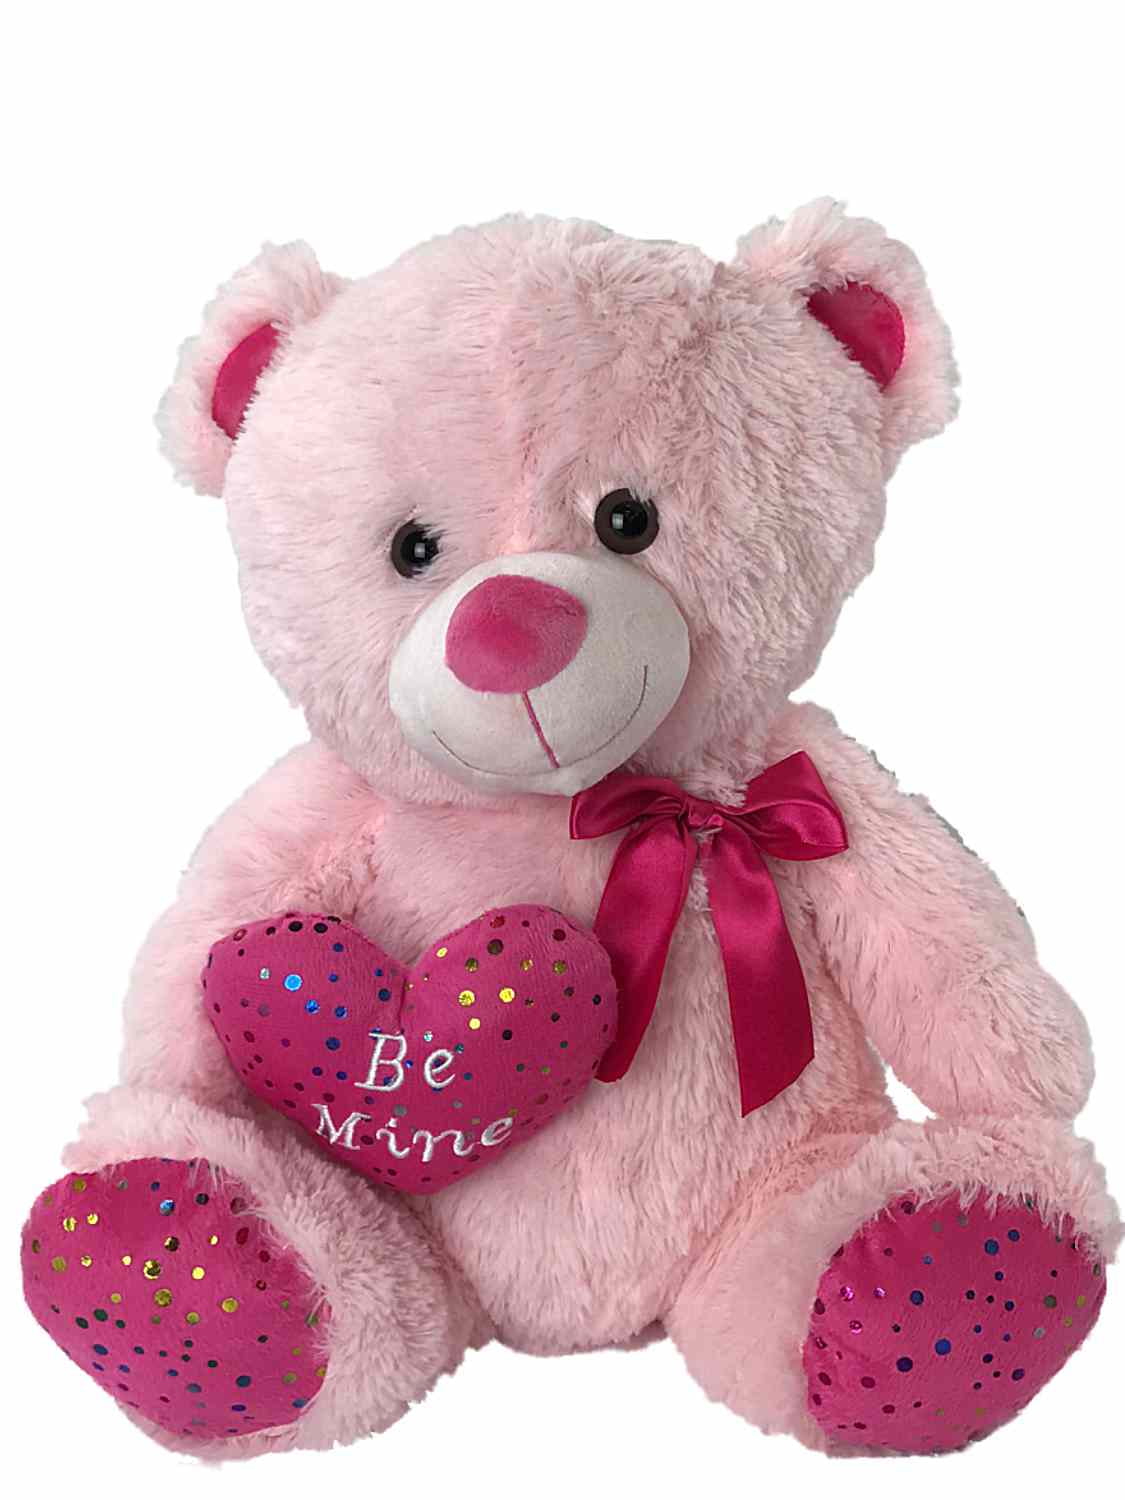 10 Stuffed Teddy Bear I Love You Gift Plush Heart Valentine 6" Pink Purple White 